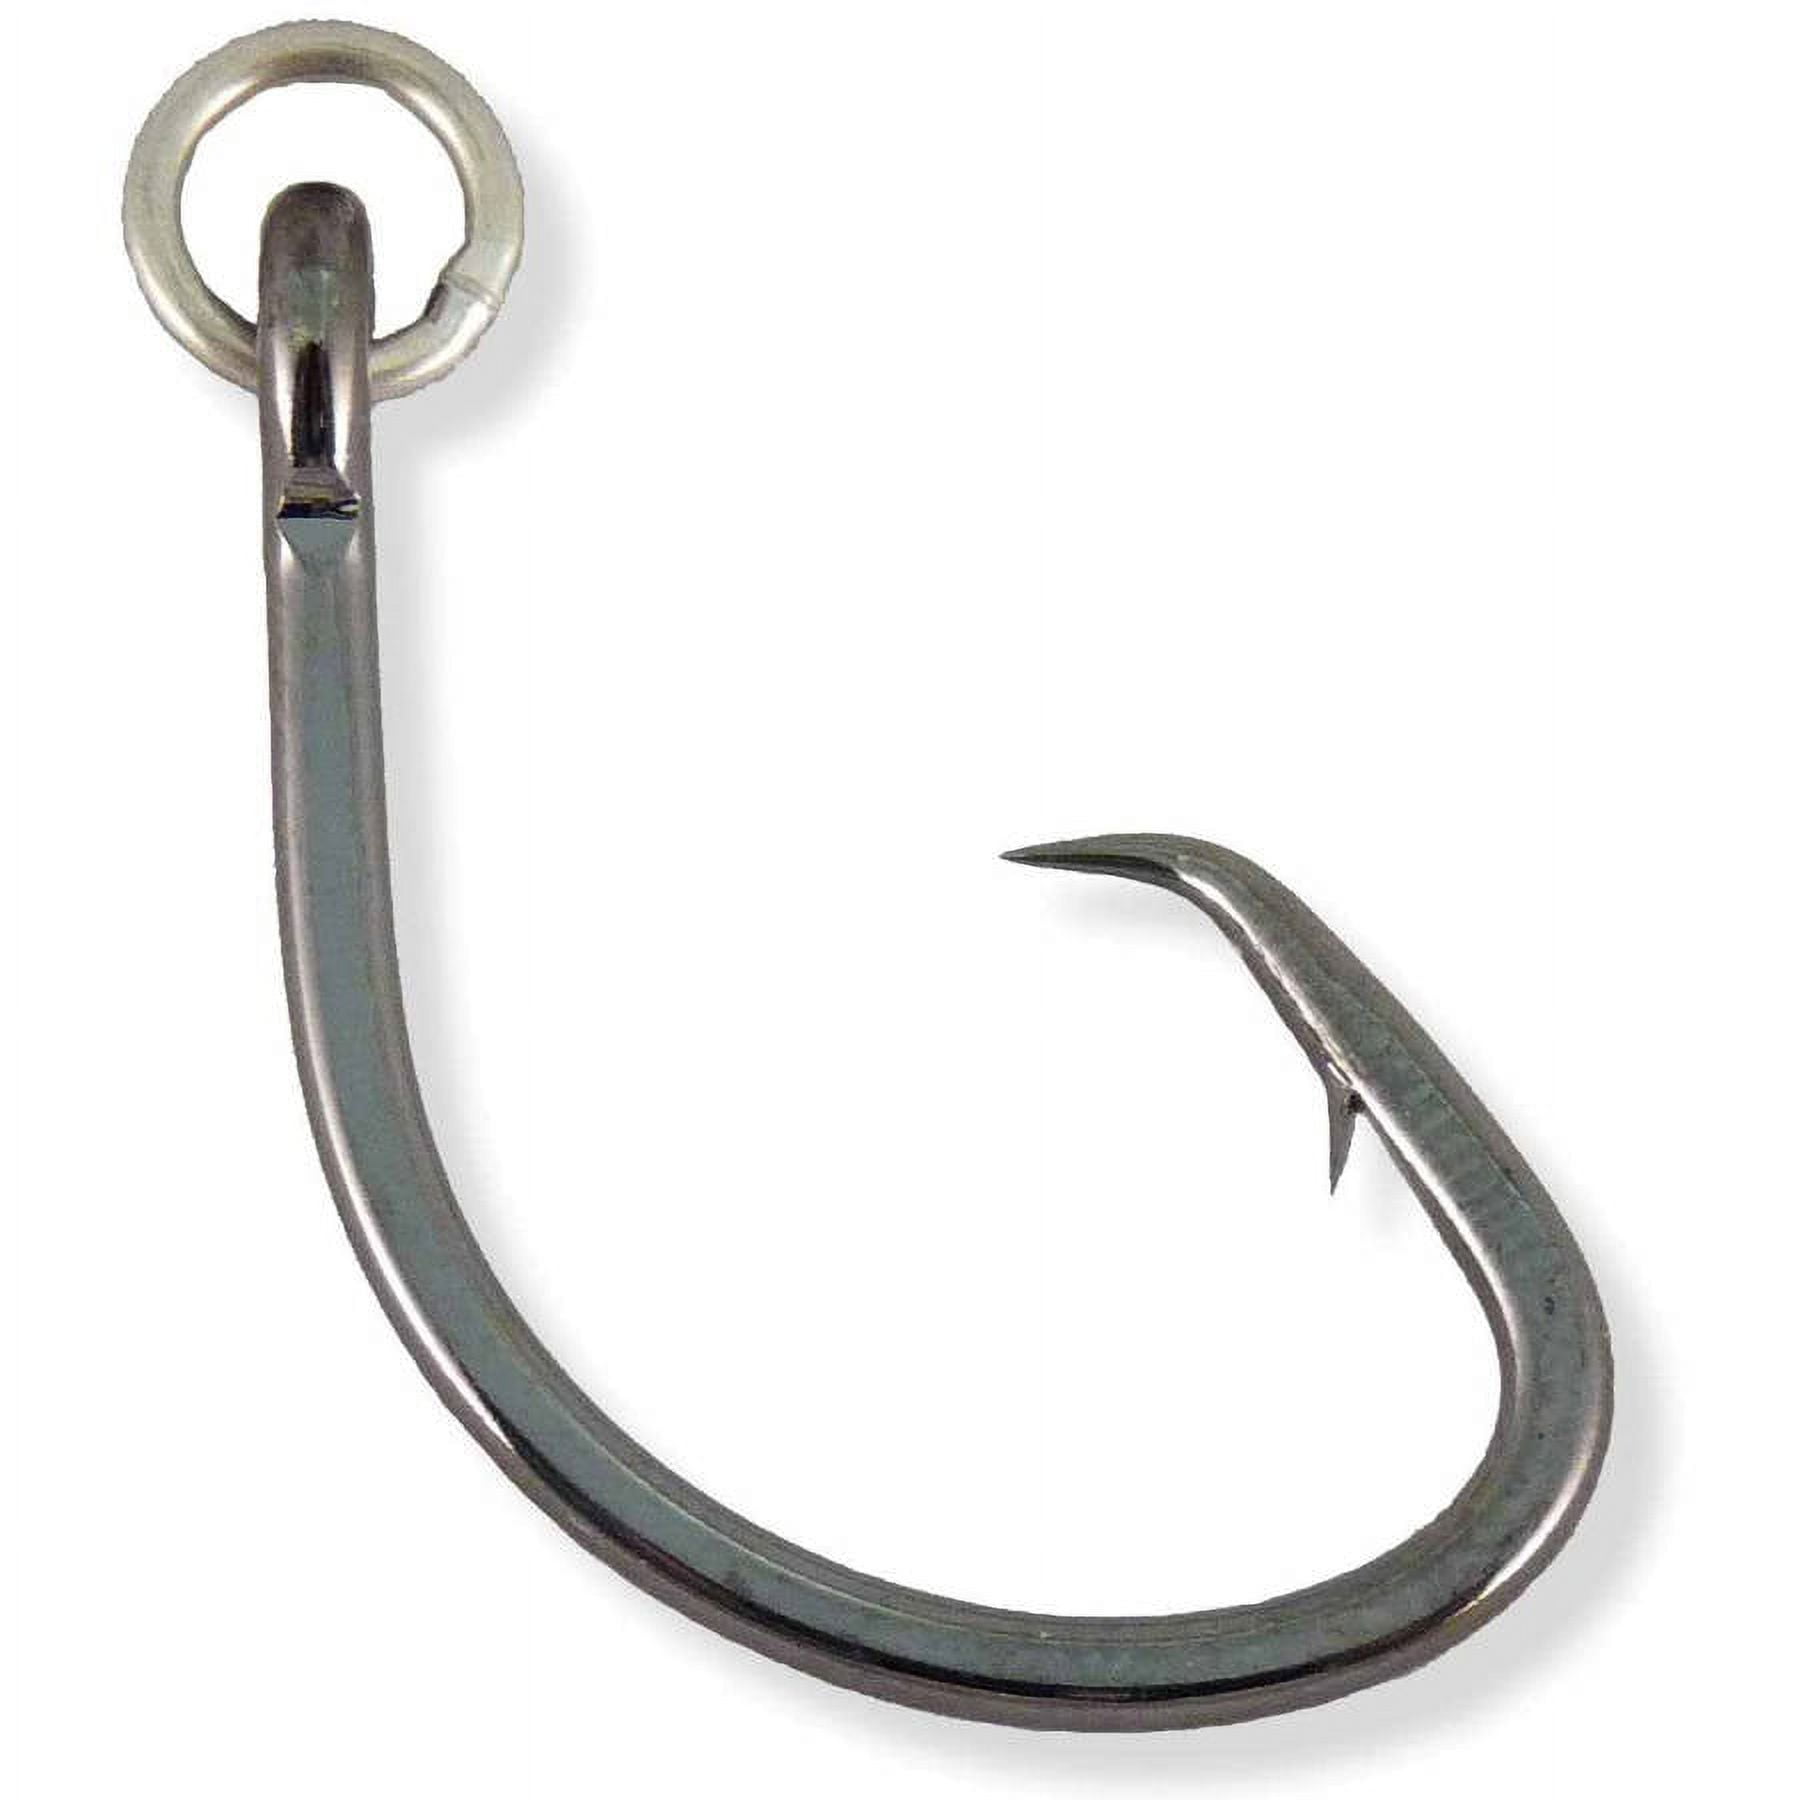 Owner Hooks Mutu Circle Ringed Hook Size 4/0 4 Pack 5163R-141 